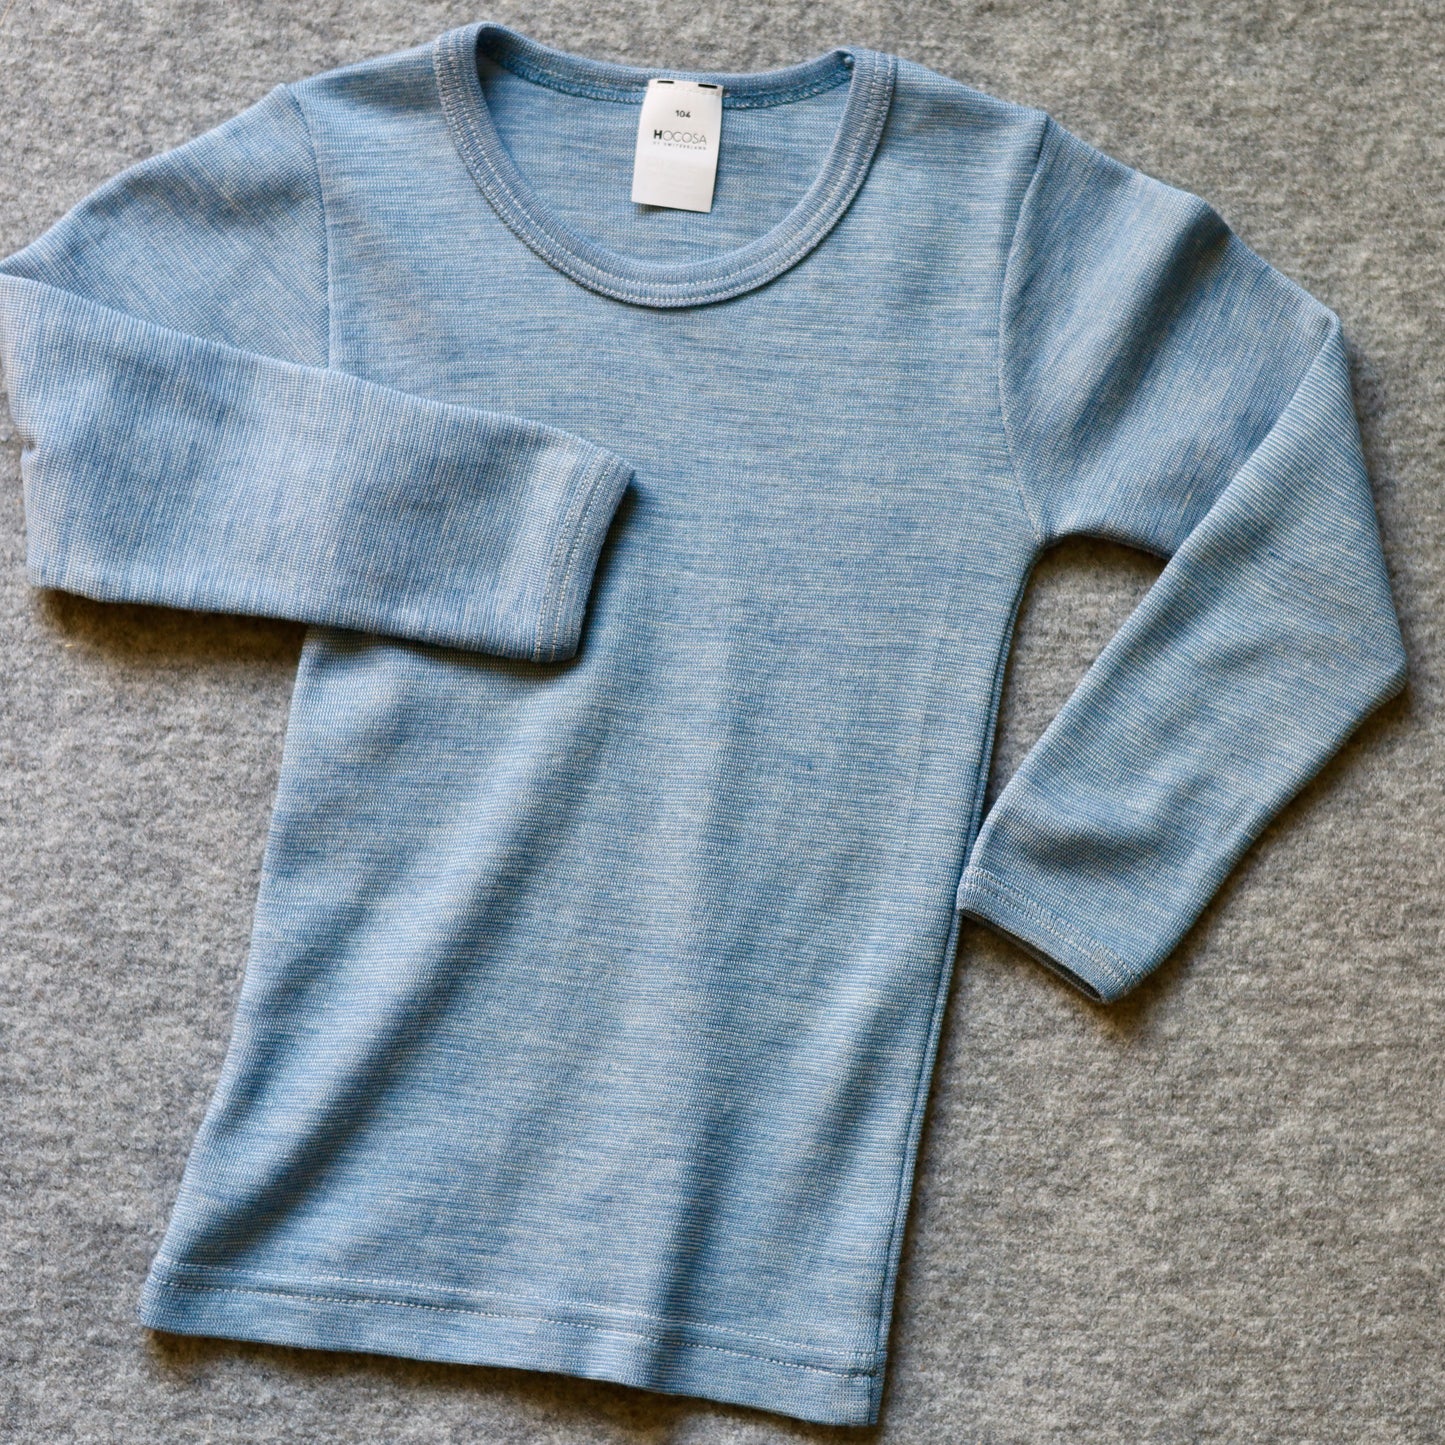 Hocosa Child Long Sleeve Shirt, Wool/Silk, Blue Jean